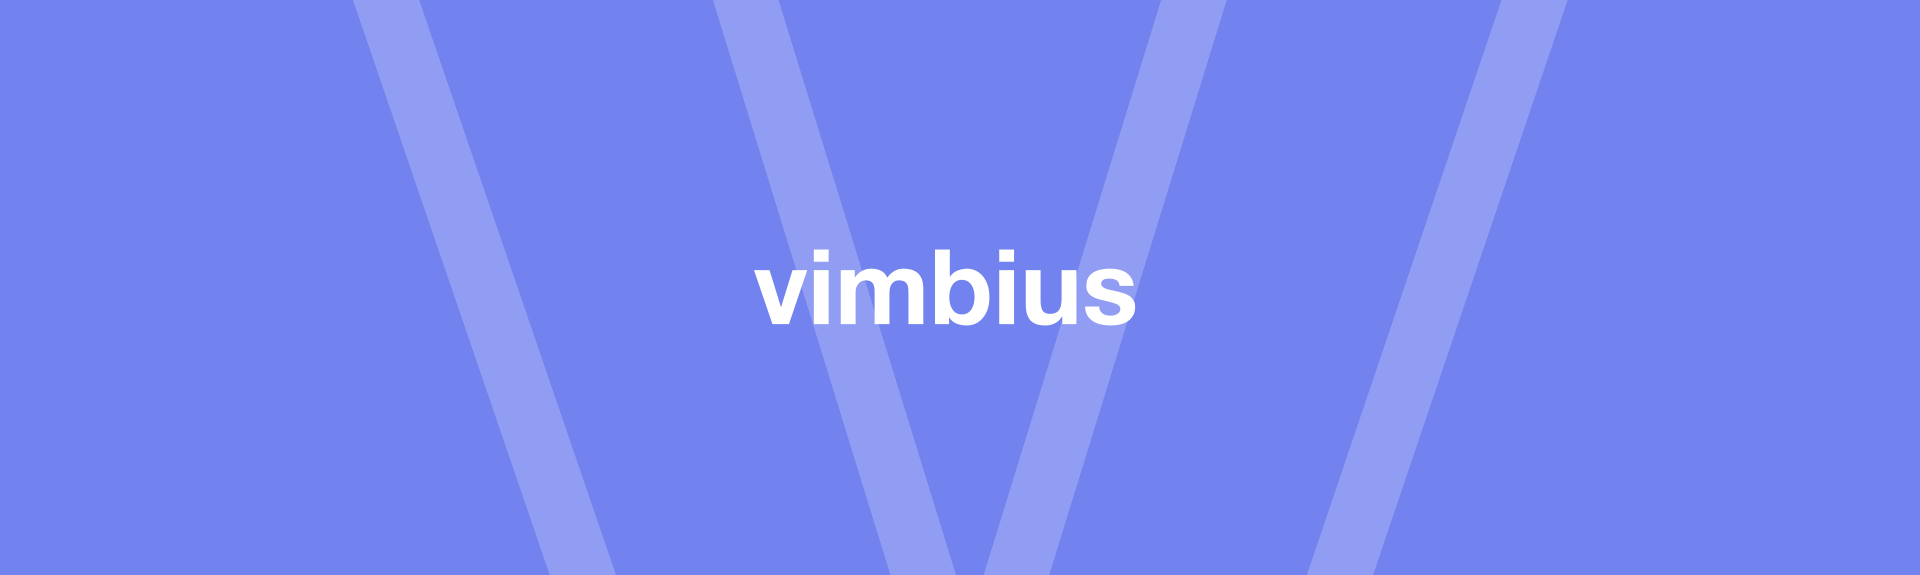 VIMPS_Banner.png